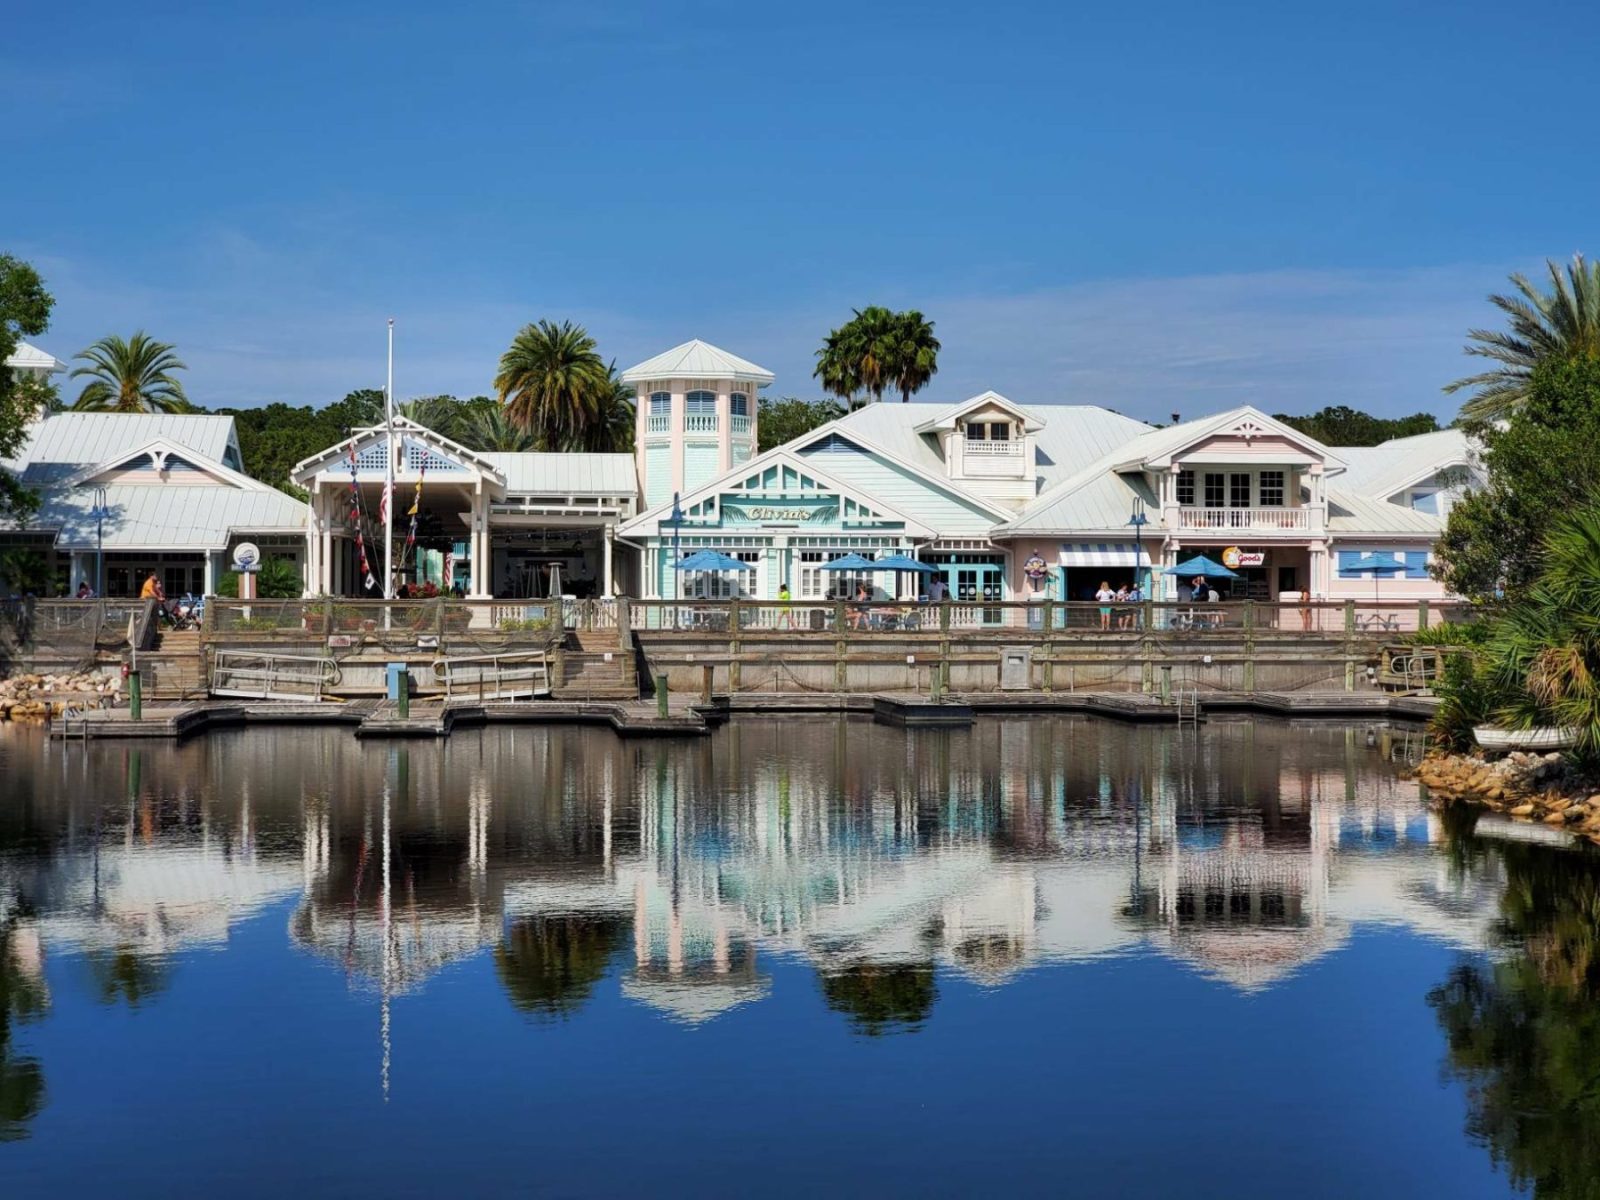 Disney's Old Key West Marina